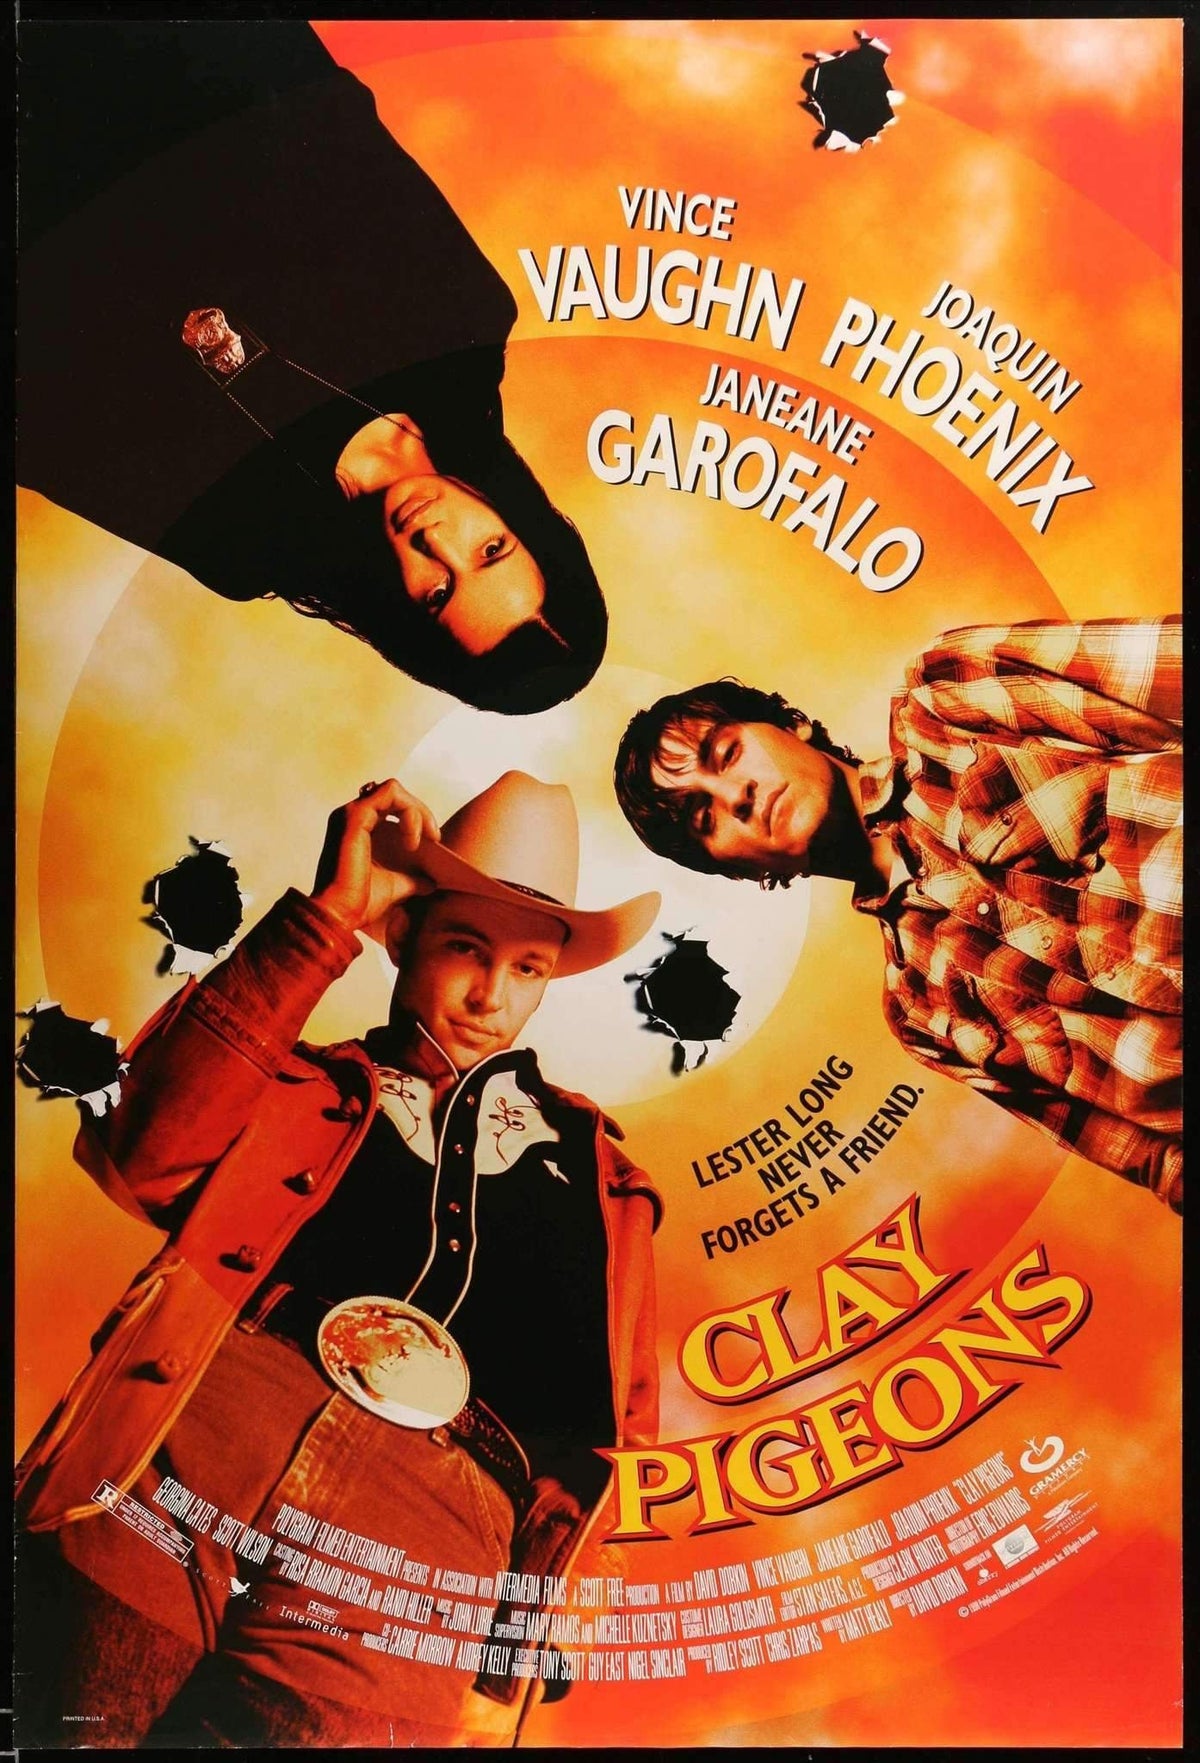 Clay Pigeons (1998) original movie poster for sale at Original Film Art